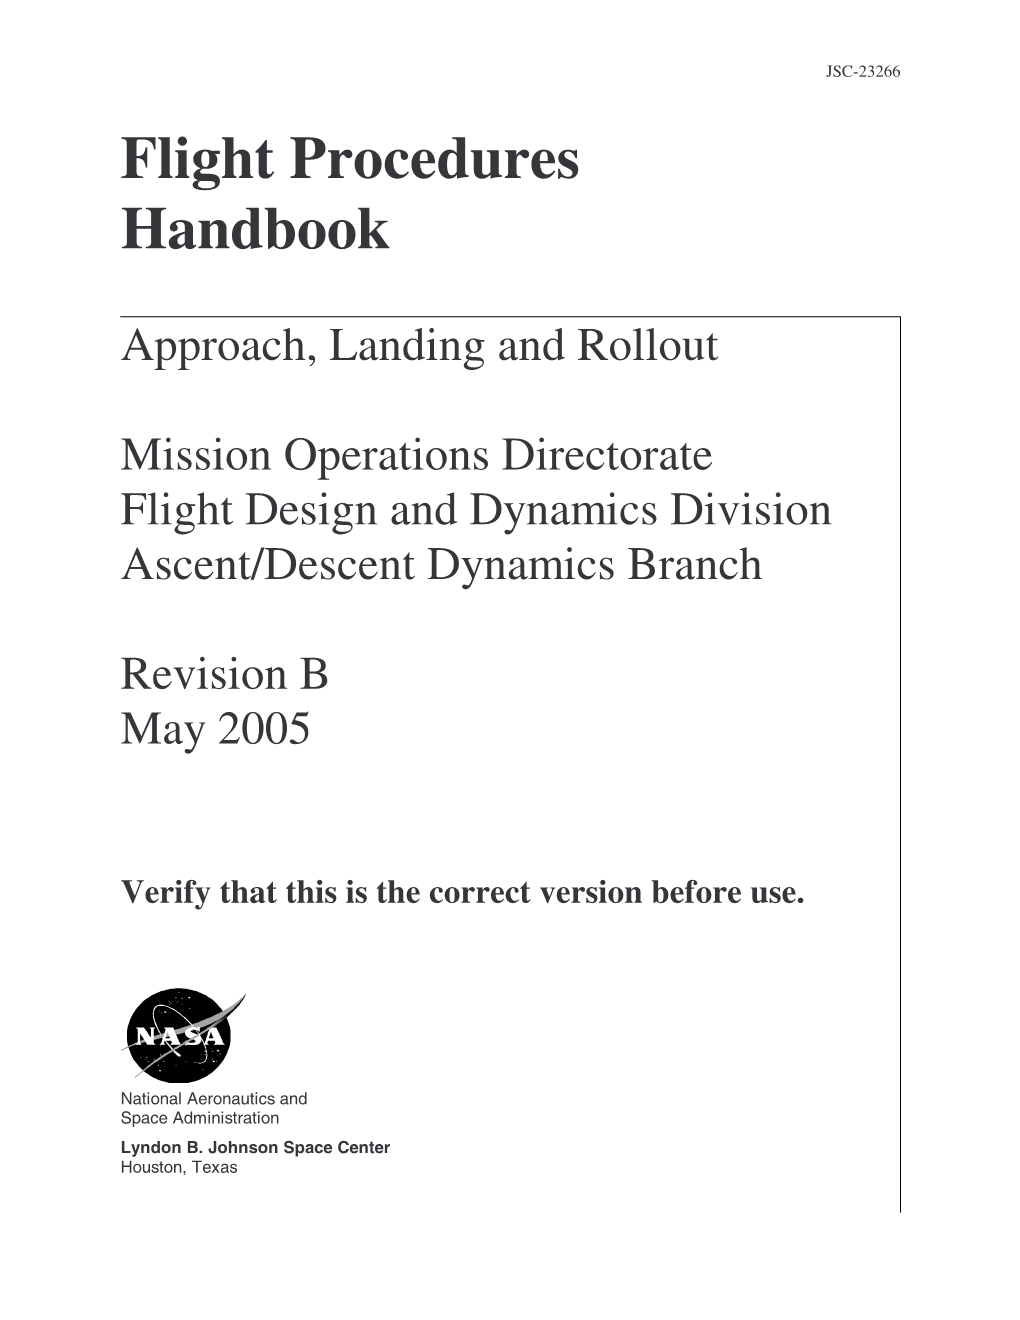 Approach, Landing and Rollout Flight Procedures Handbook Revision B